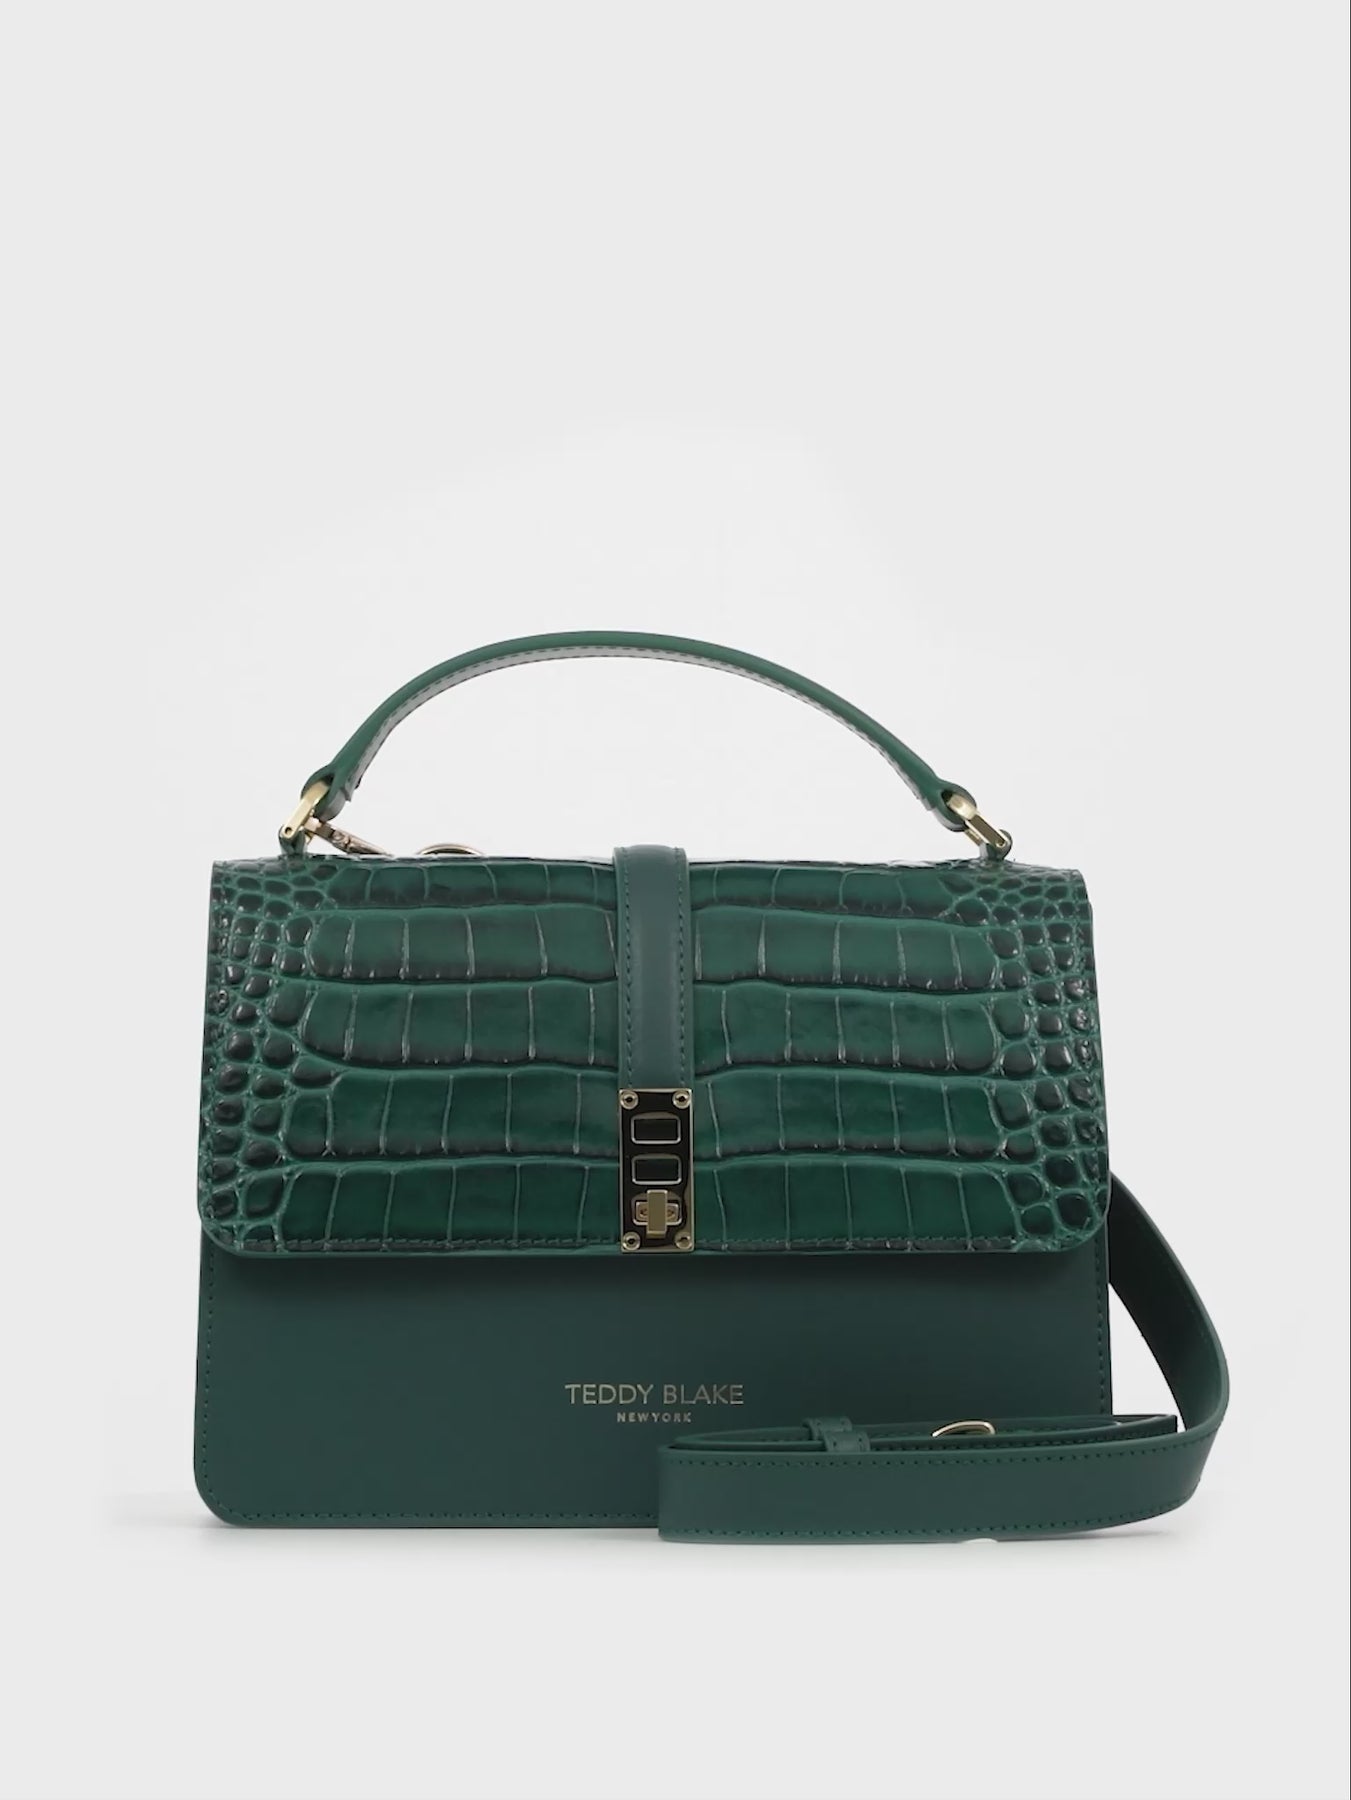 Olive Green Handbag as a Neutral-My new Teddy Blake Bag Styled with Denim -  Elegantly Dressed and Stylish